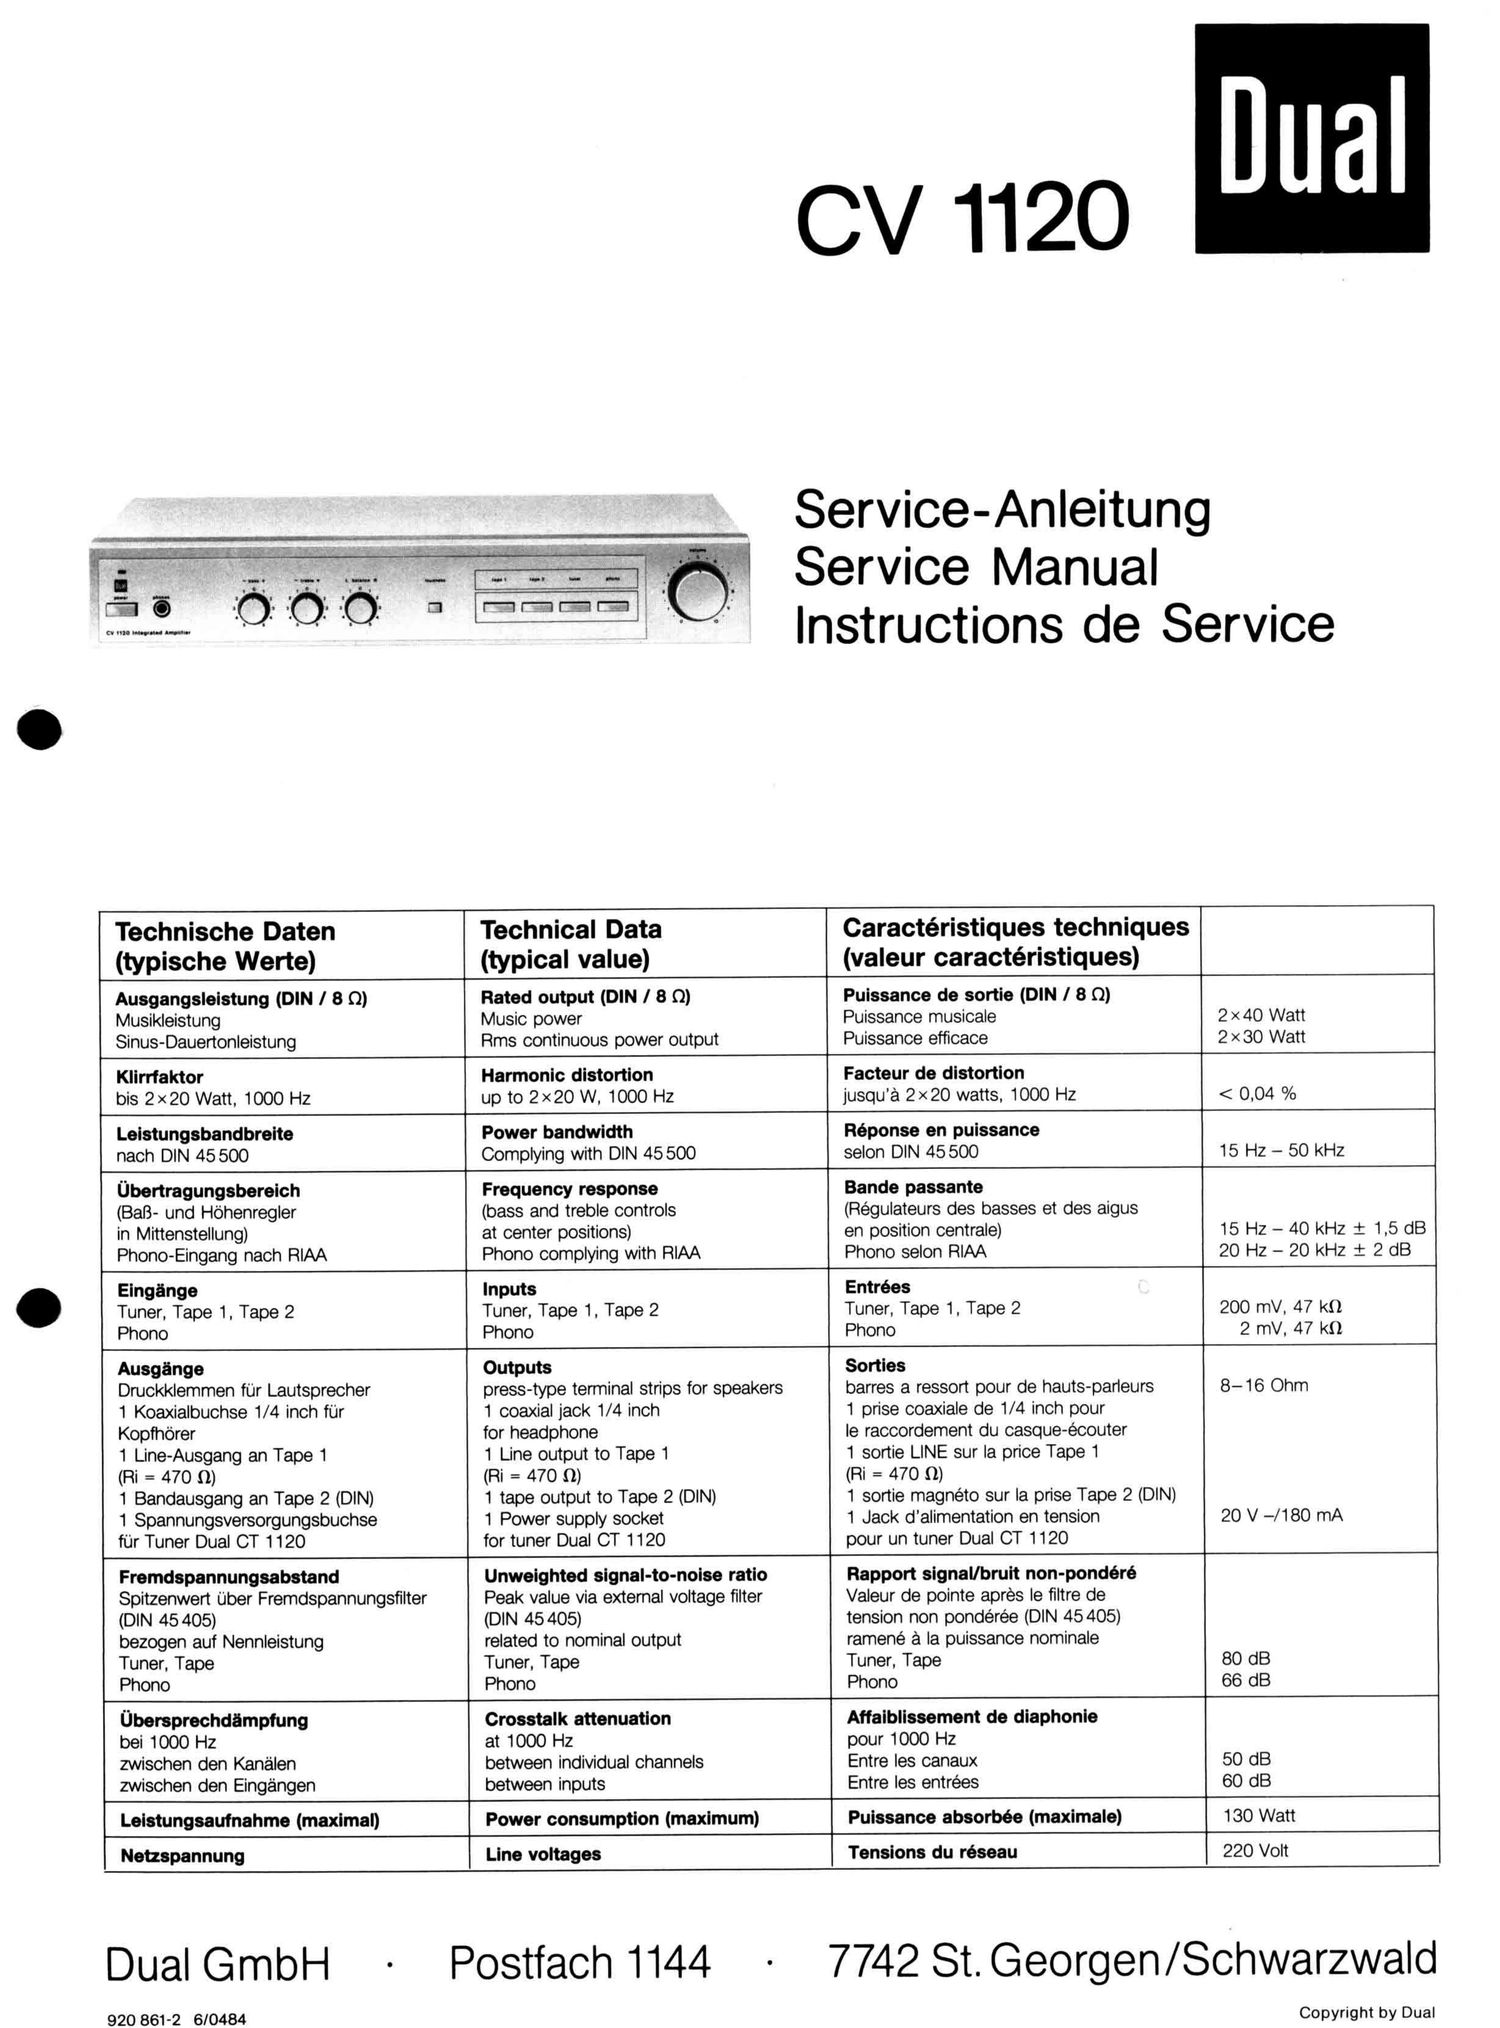 Dual CV 1120 Service Manual